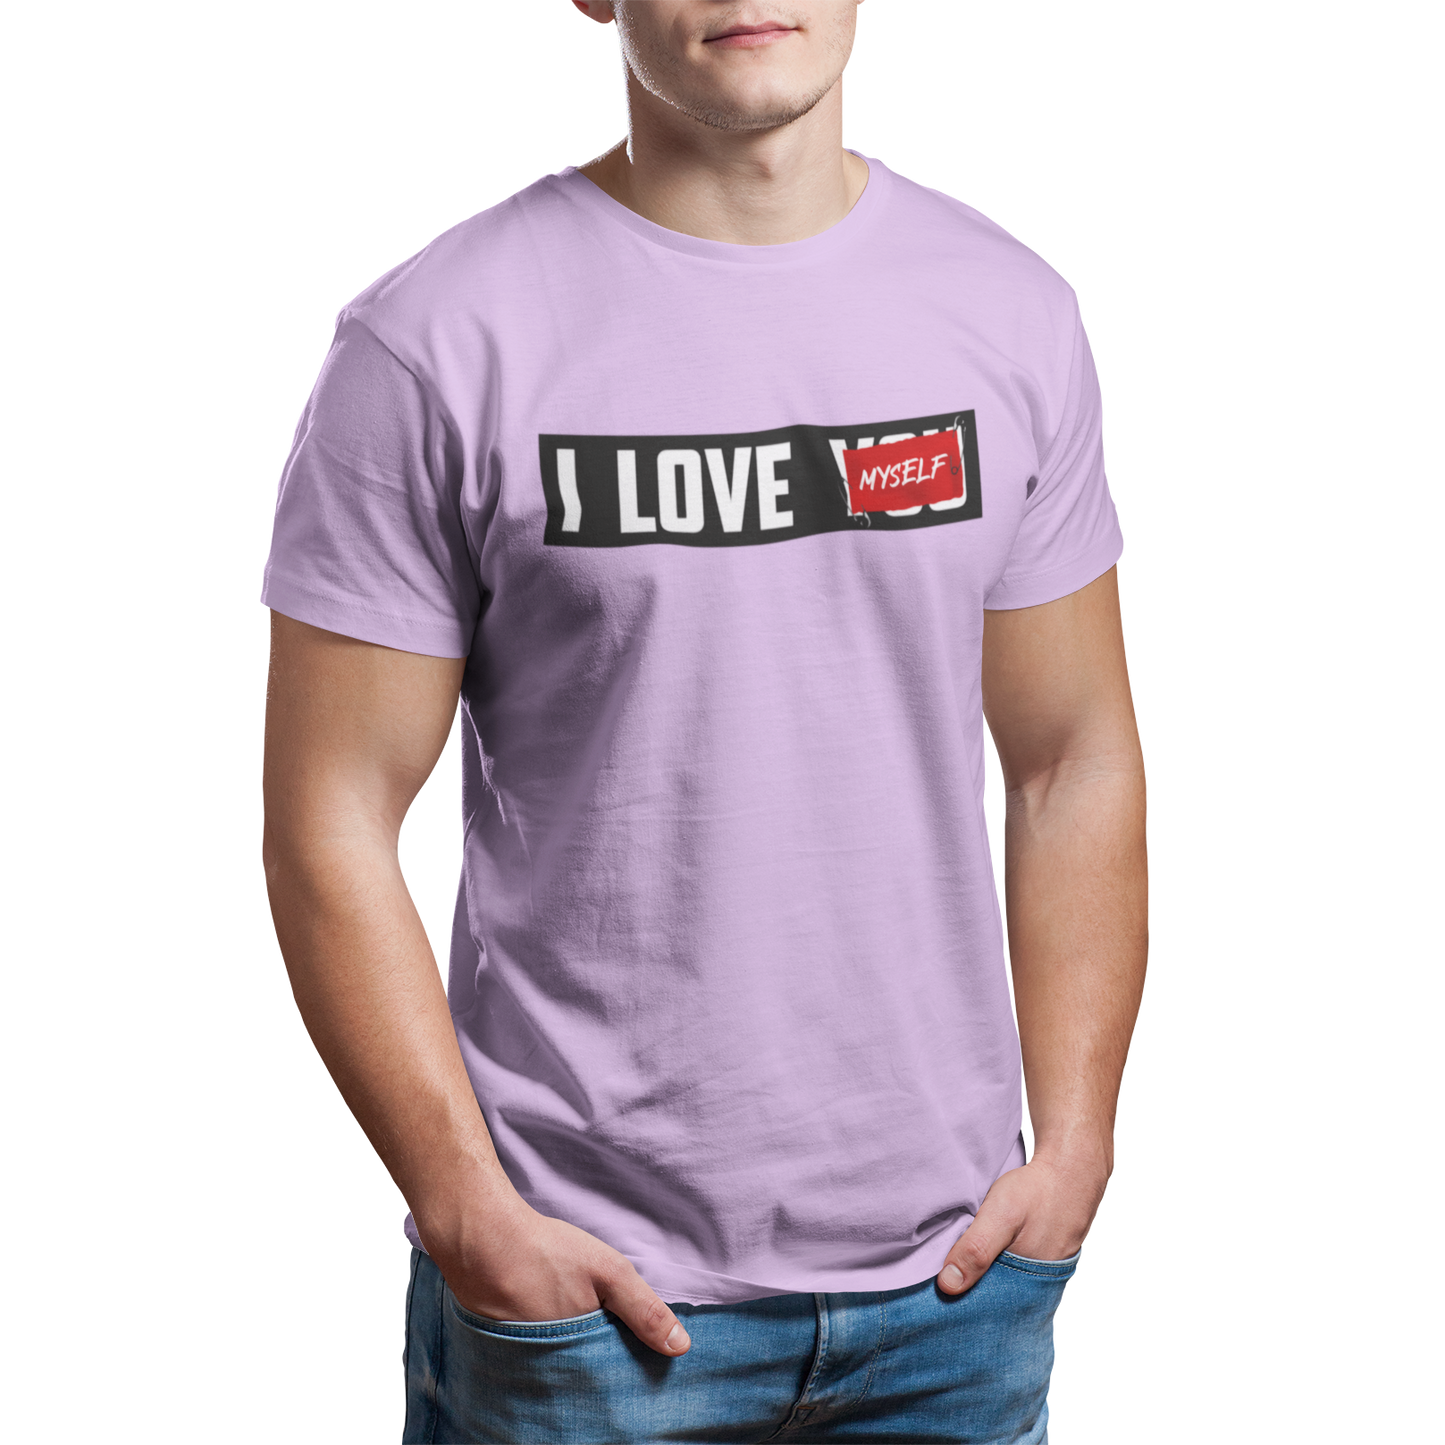 I Love Myself Round Neck Cotton T-Shirt - Purple